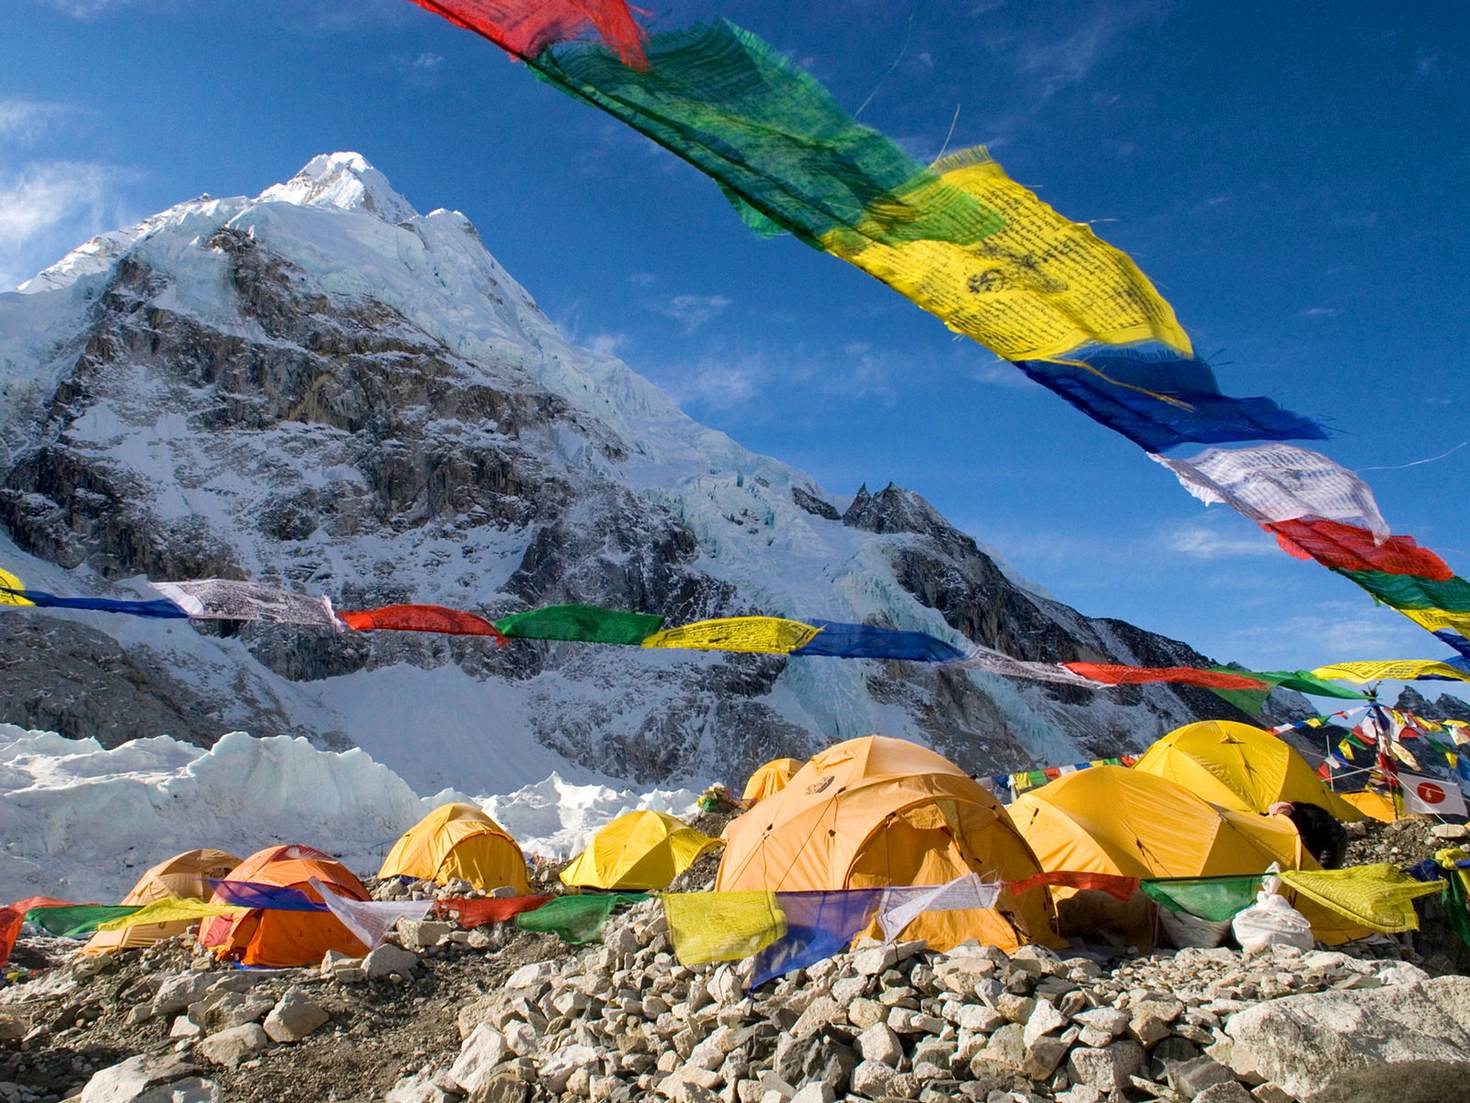 Tent city at Everest Base Camp Â© Danita Delimont / Getty Images